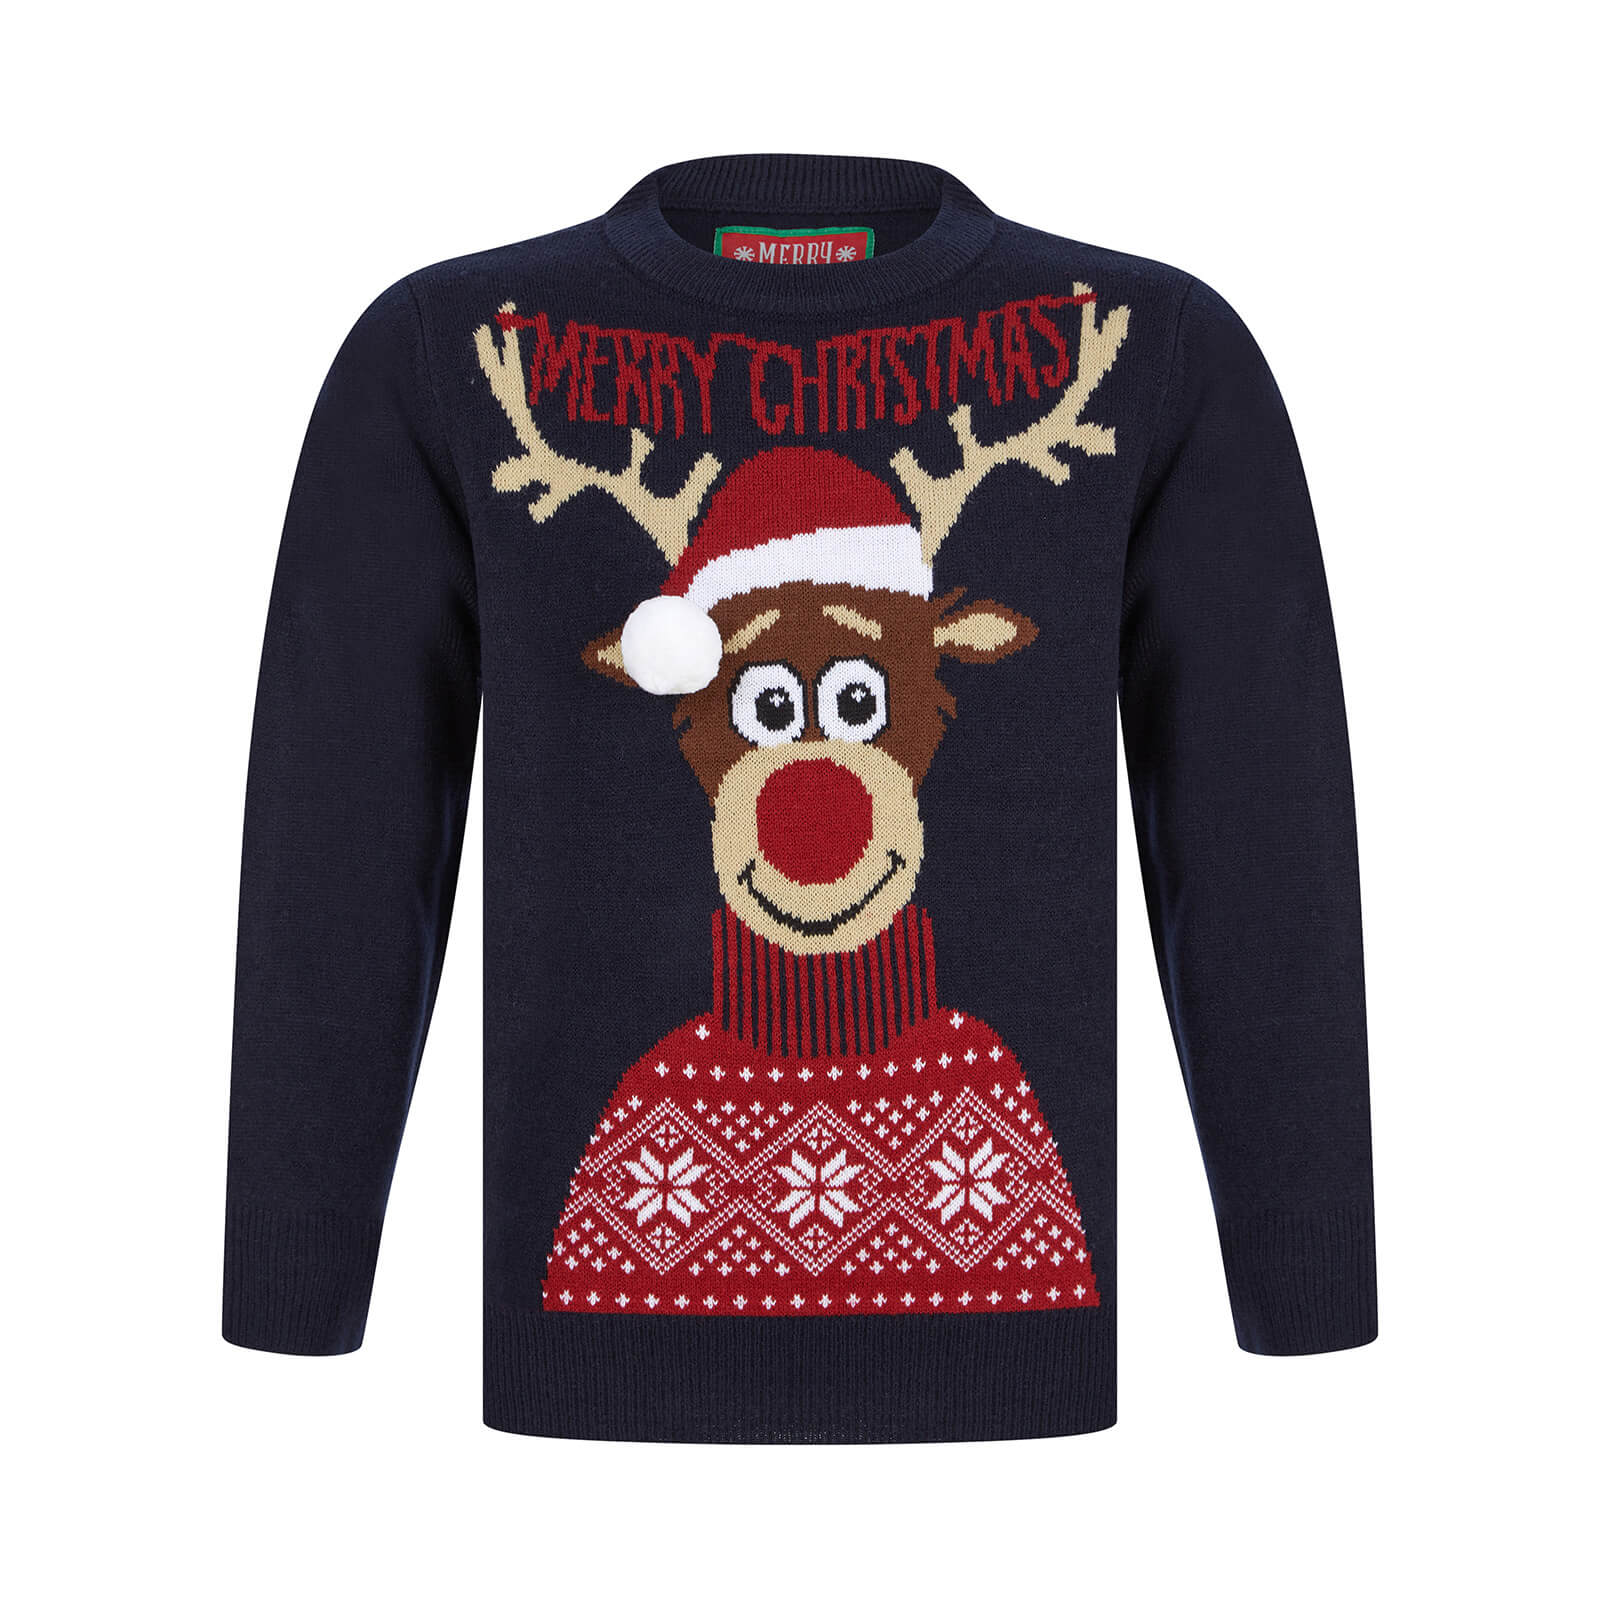 Mr Crimbo Kids Merry Christmas Antlers Reindeer Xmas Jumper - MrCrimbo.co.uk -SRG2A189901_F - Ink -11-13 years